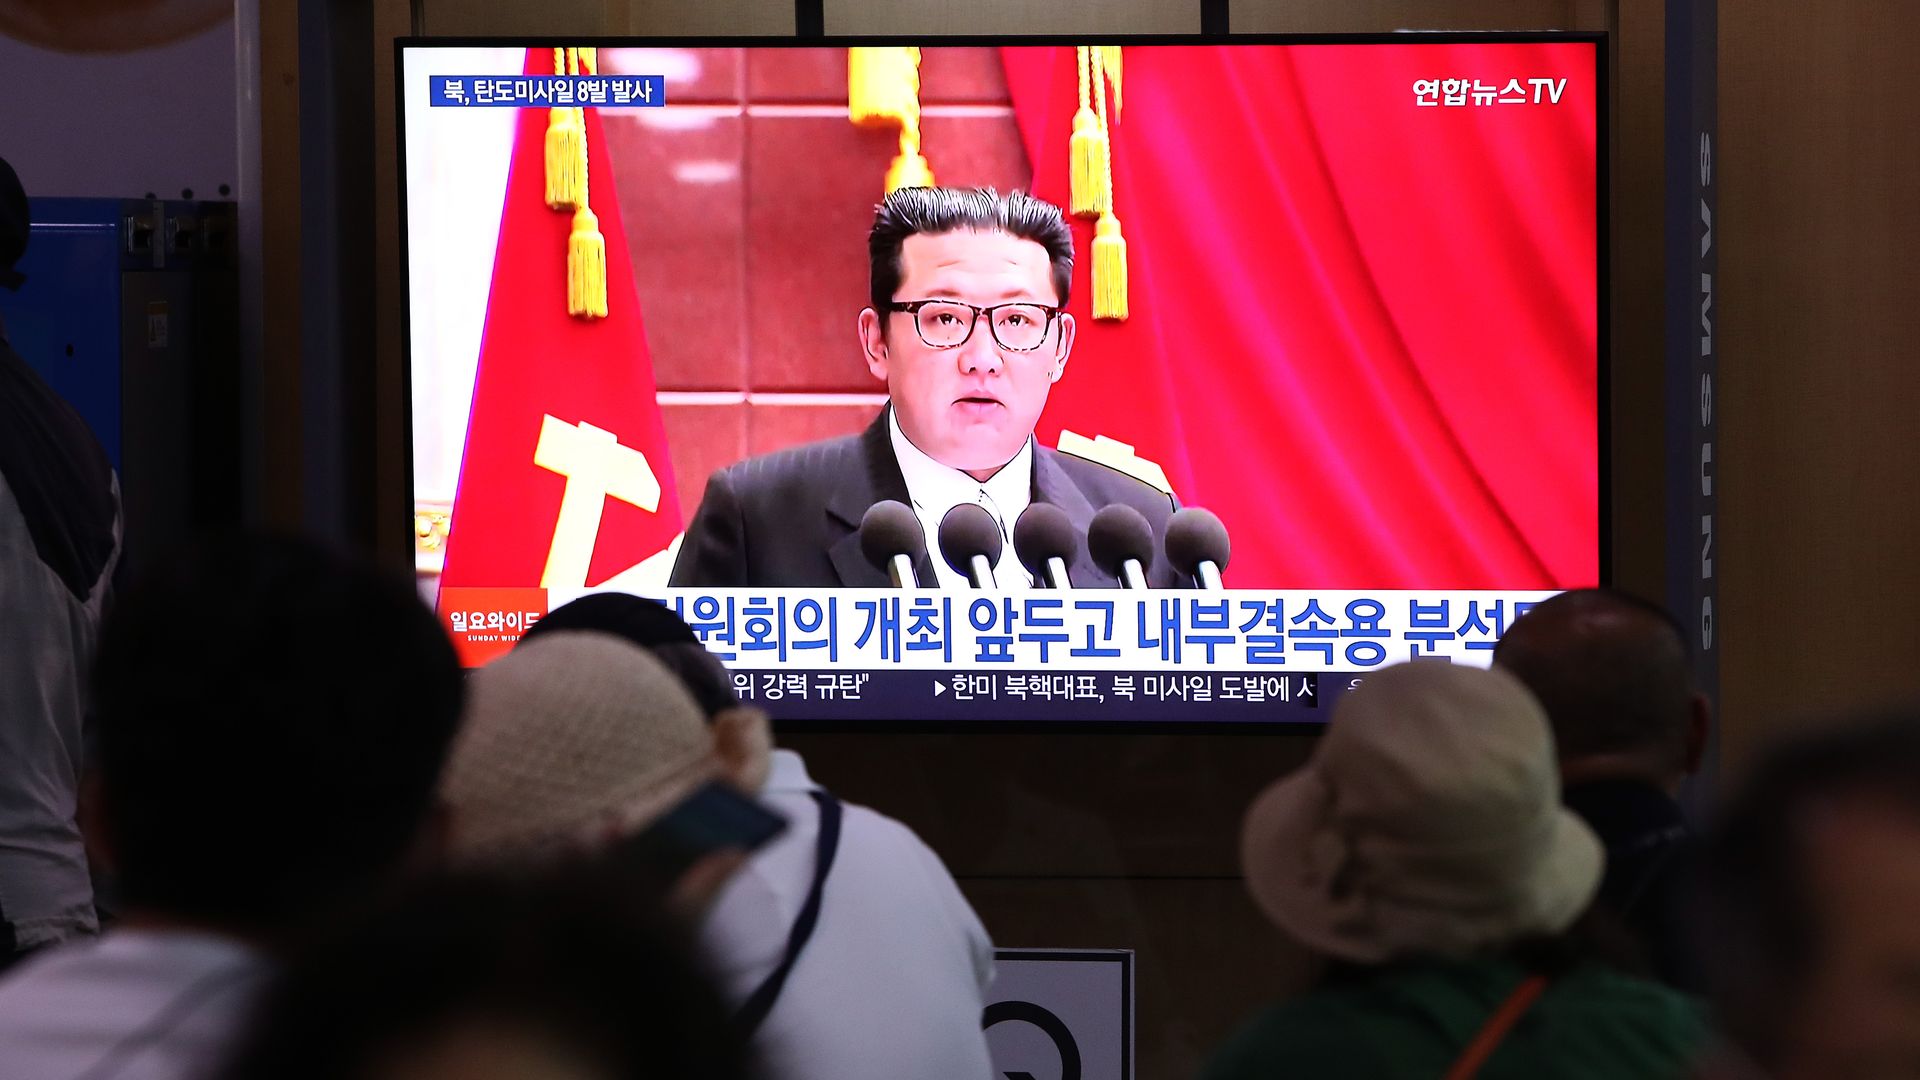 North Korean leader Kim Jong-un on a television in Seoul, South Korea, in June 2022.